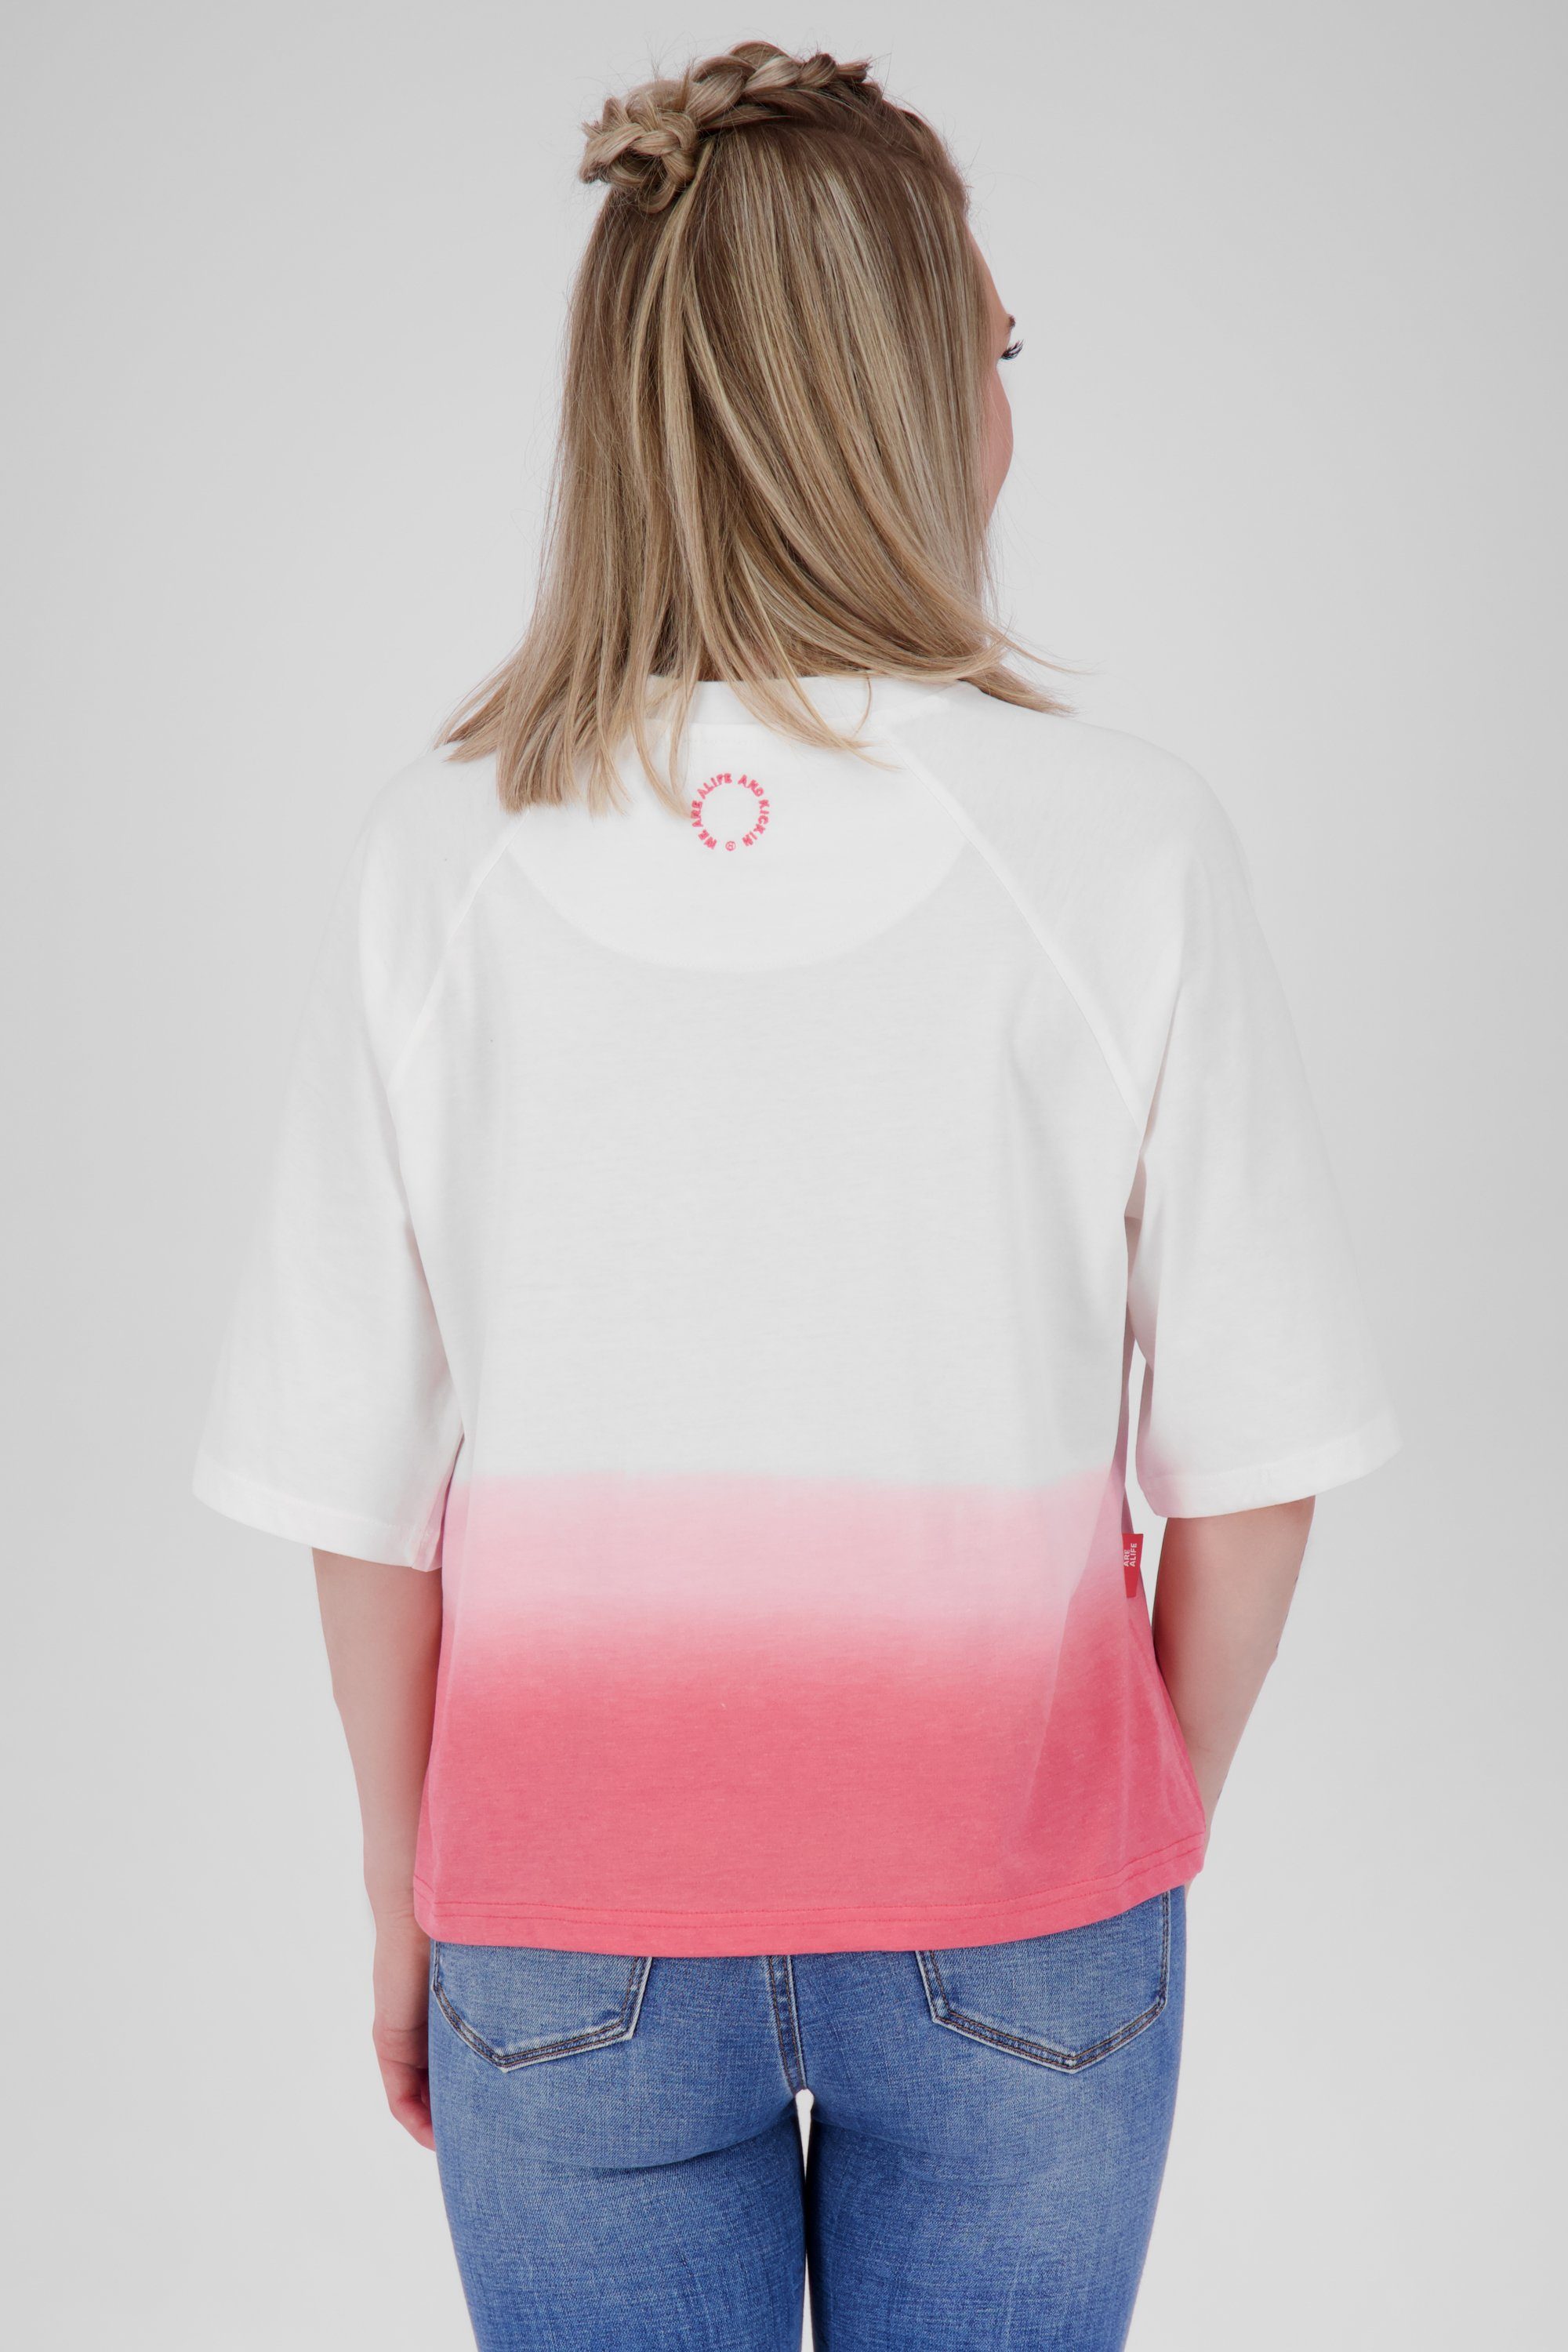 Alife RubyAK Shirt Damen Rundhalsshirt & flamingo Kickin B Shirt